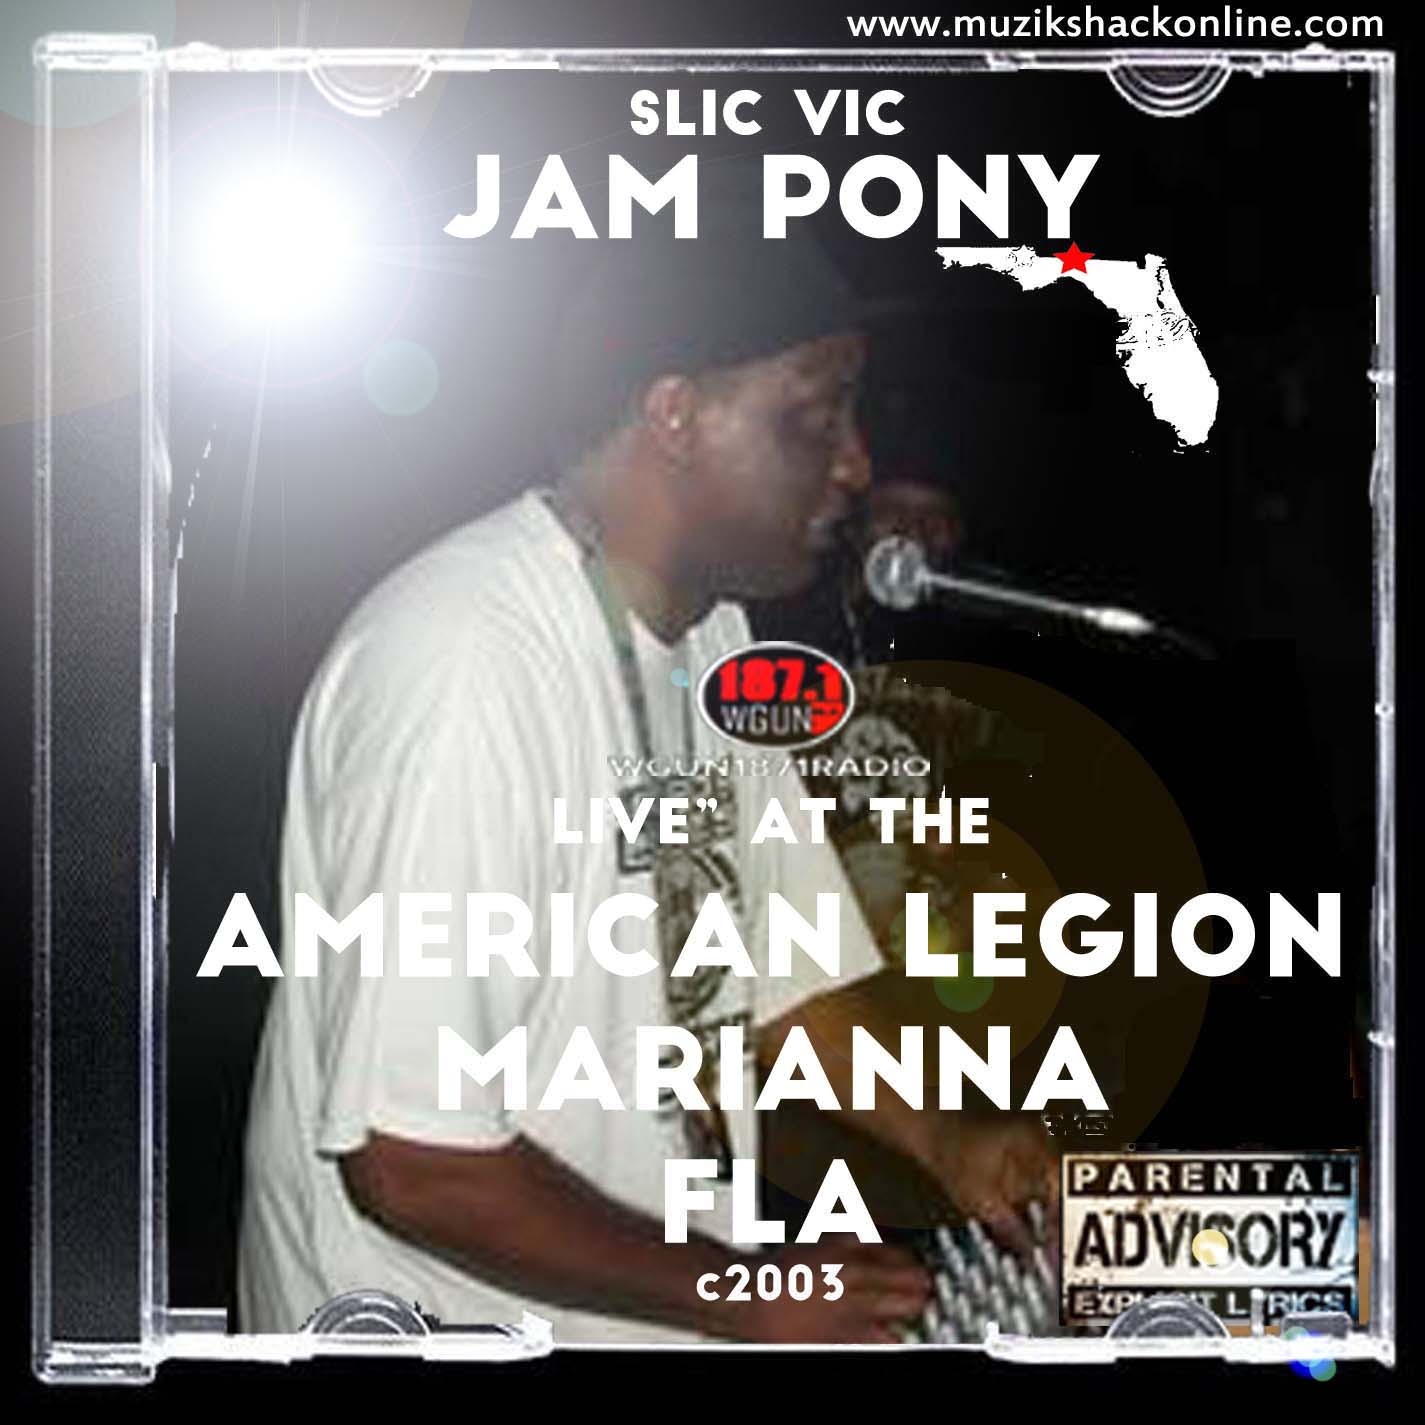 SLIC VIC - THE AMERICAN LEGION MARIANNA FLA (LIVE COPY) c2003